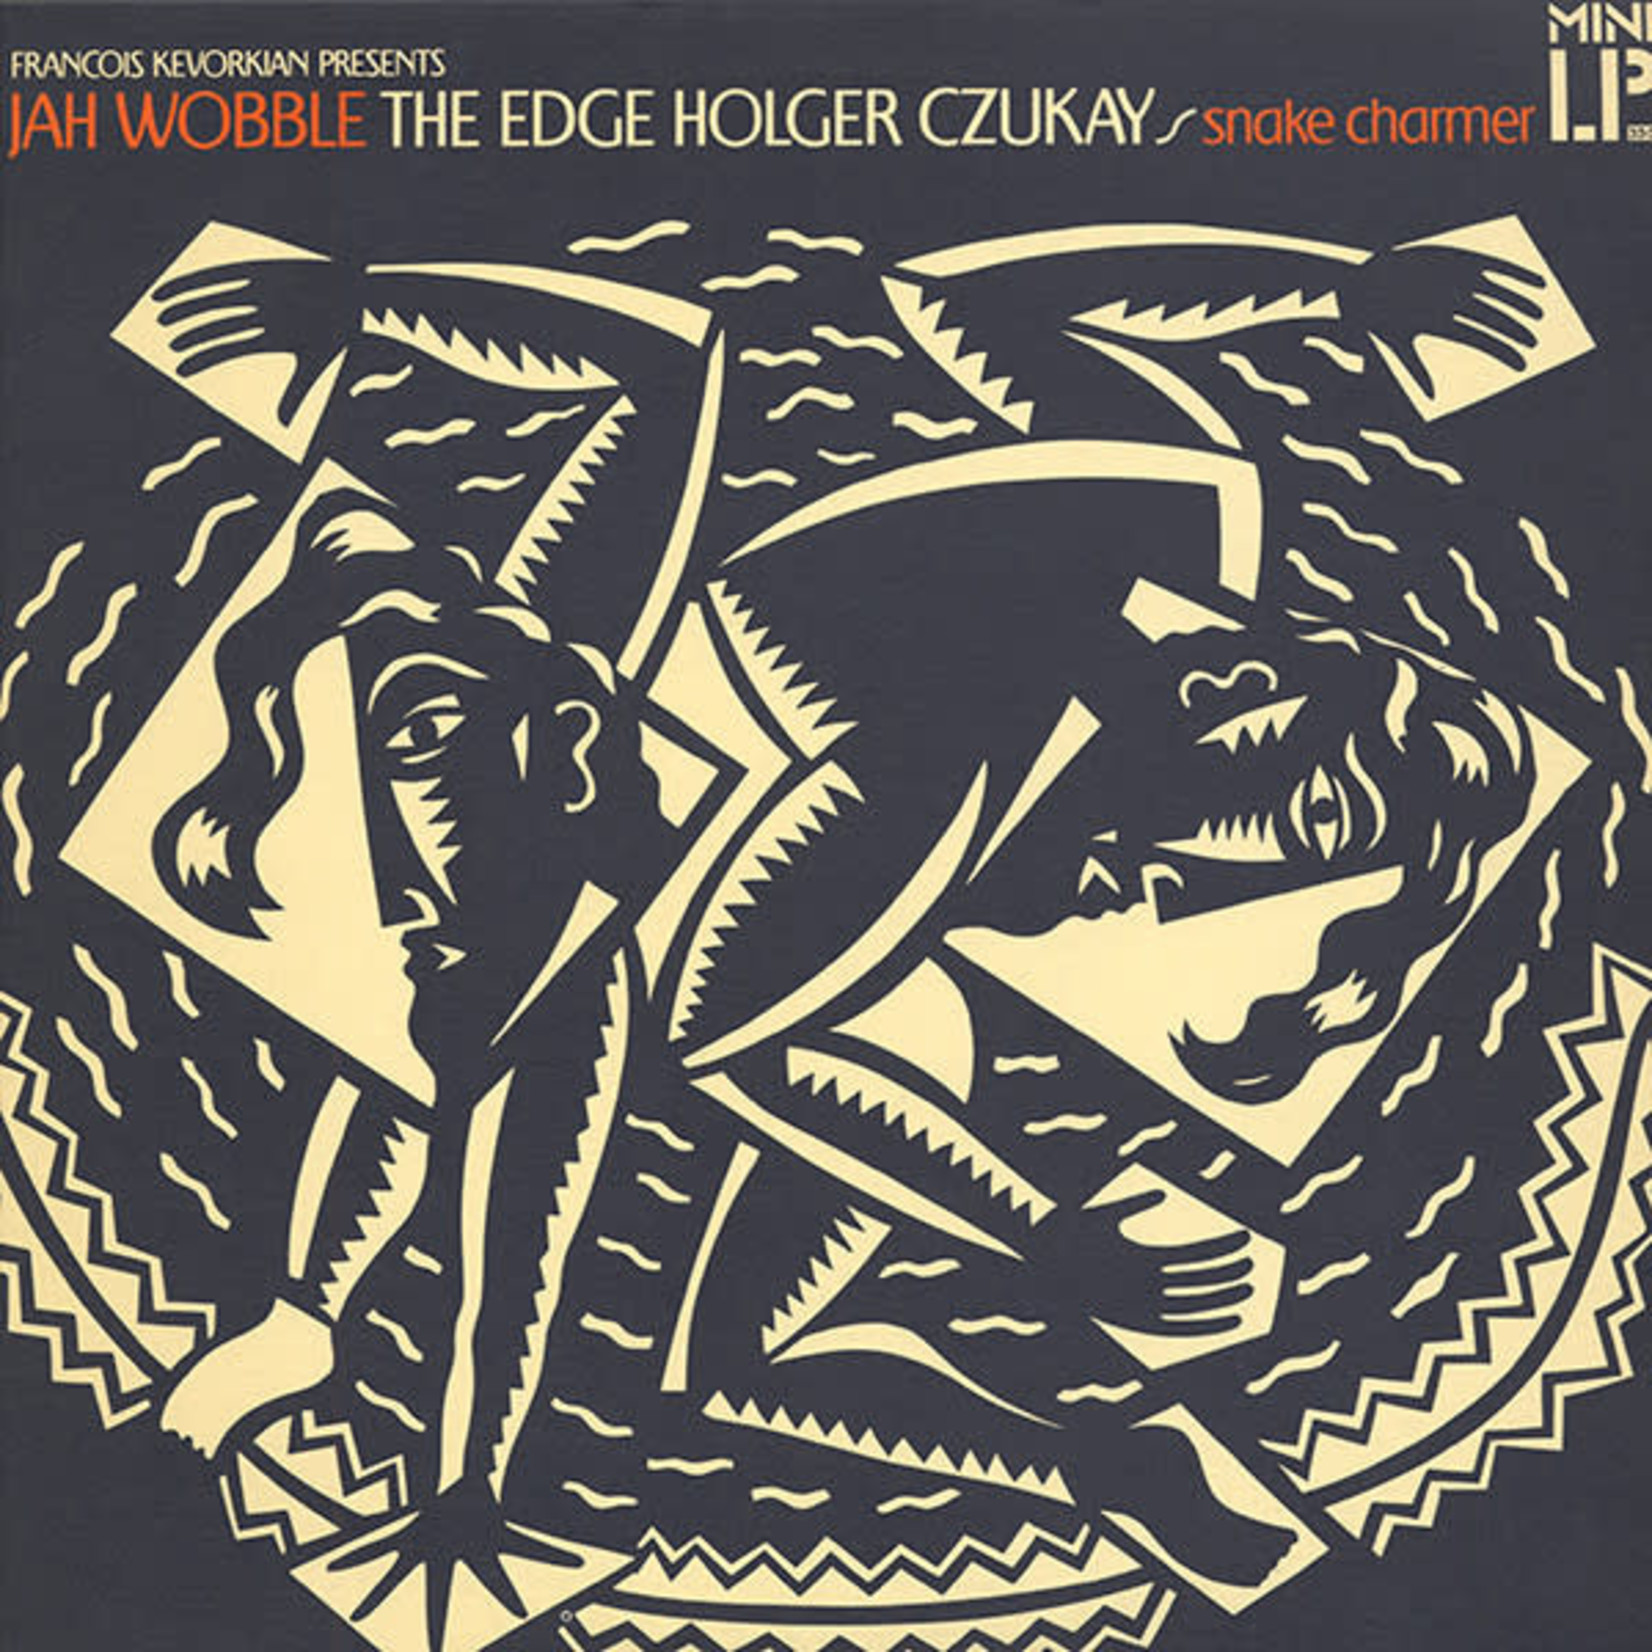 [Vintage] Holger Czukay, Jah Wobble & the Edge - Snake Charmer